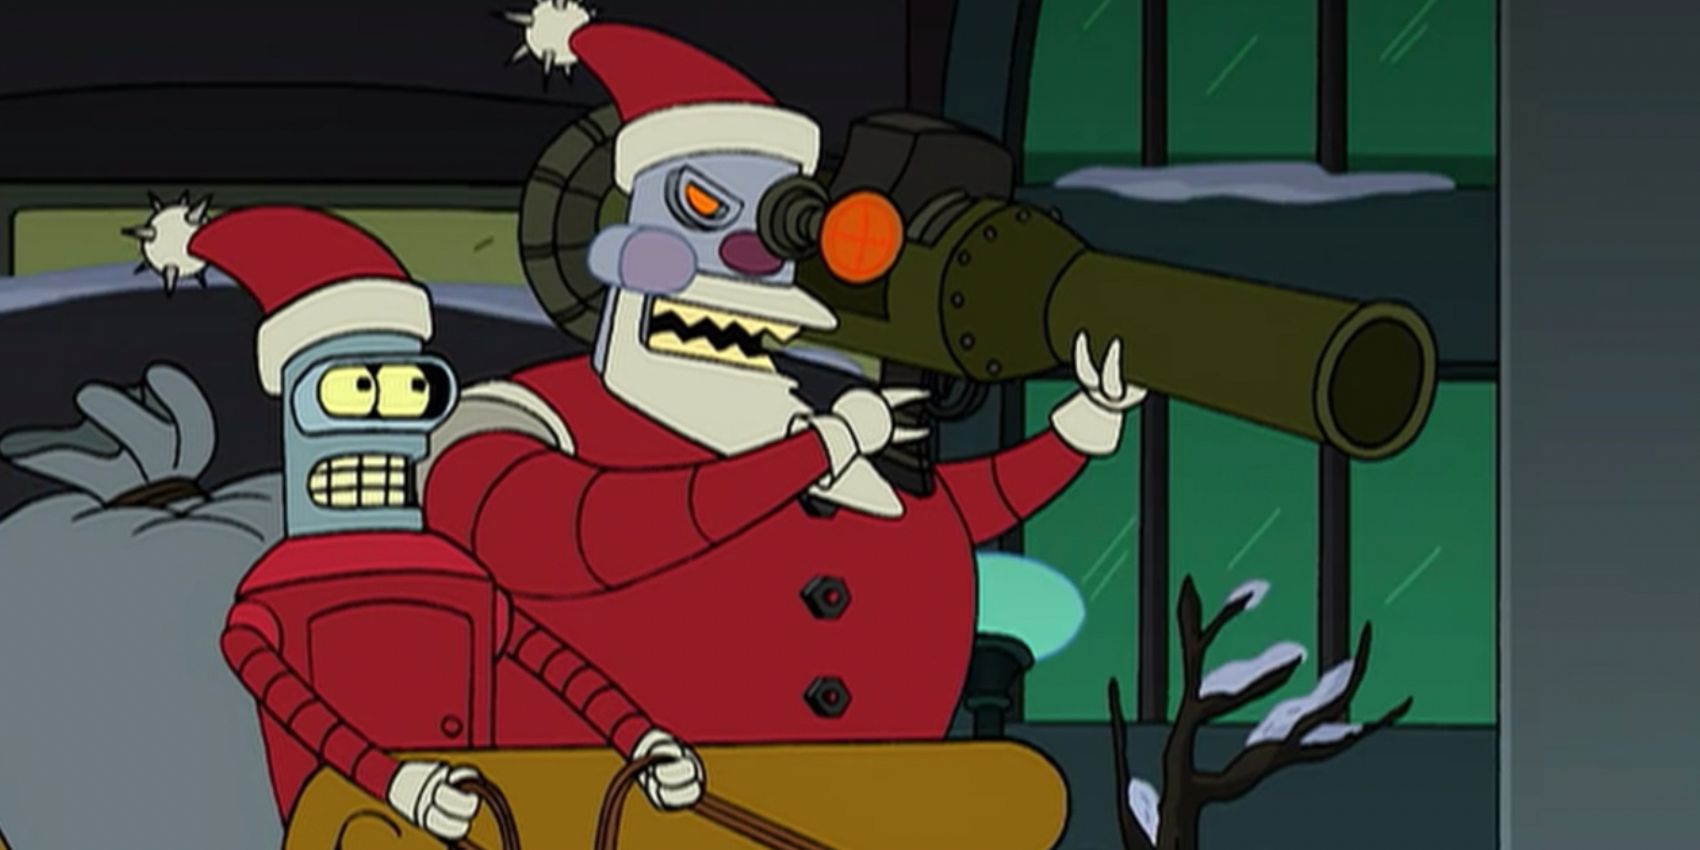 Bender and Robot Santa in a sleigh in Futurama